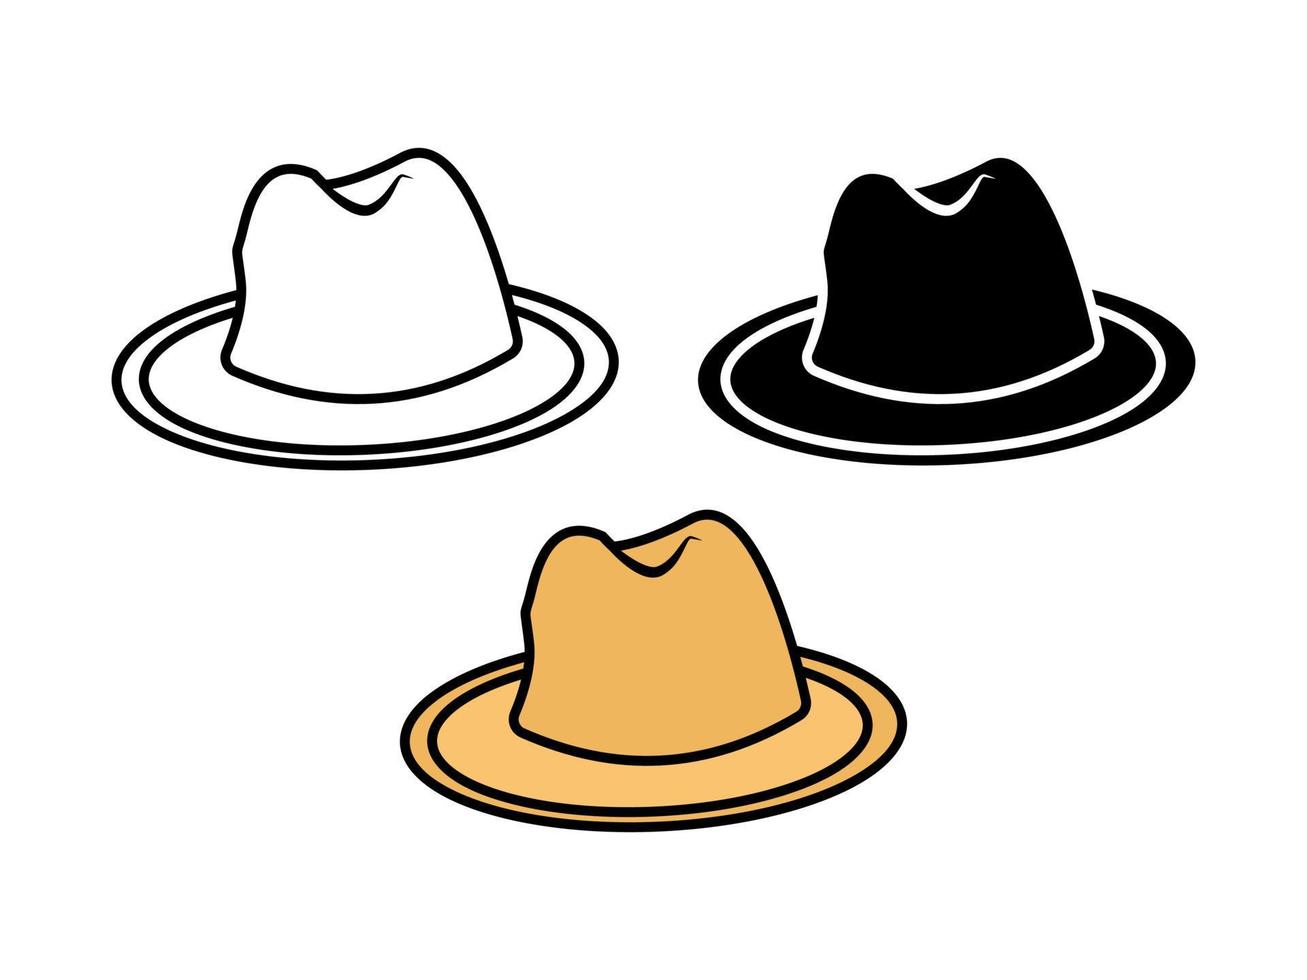 o design gráfico simples do chapéu panamá é adequado para ser usado como logotipo ou complemento de design vetor